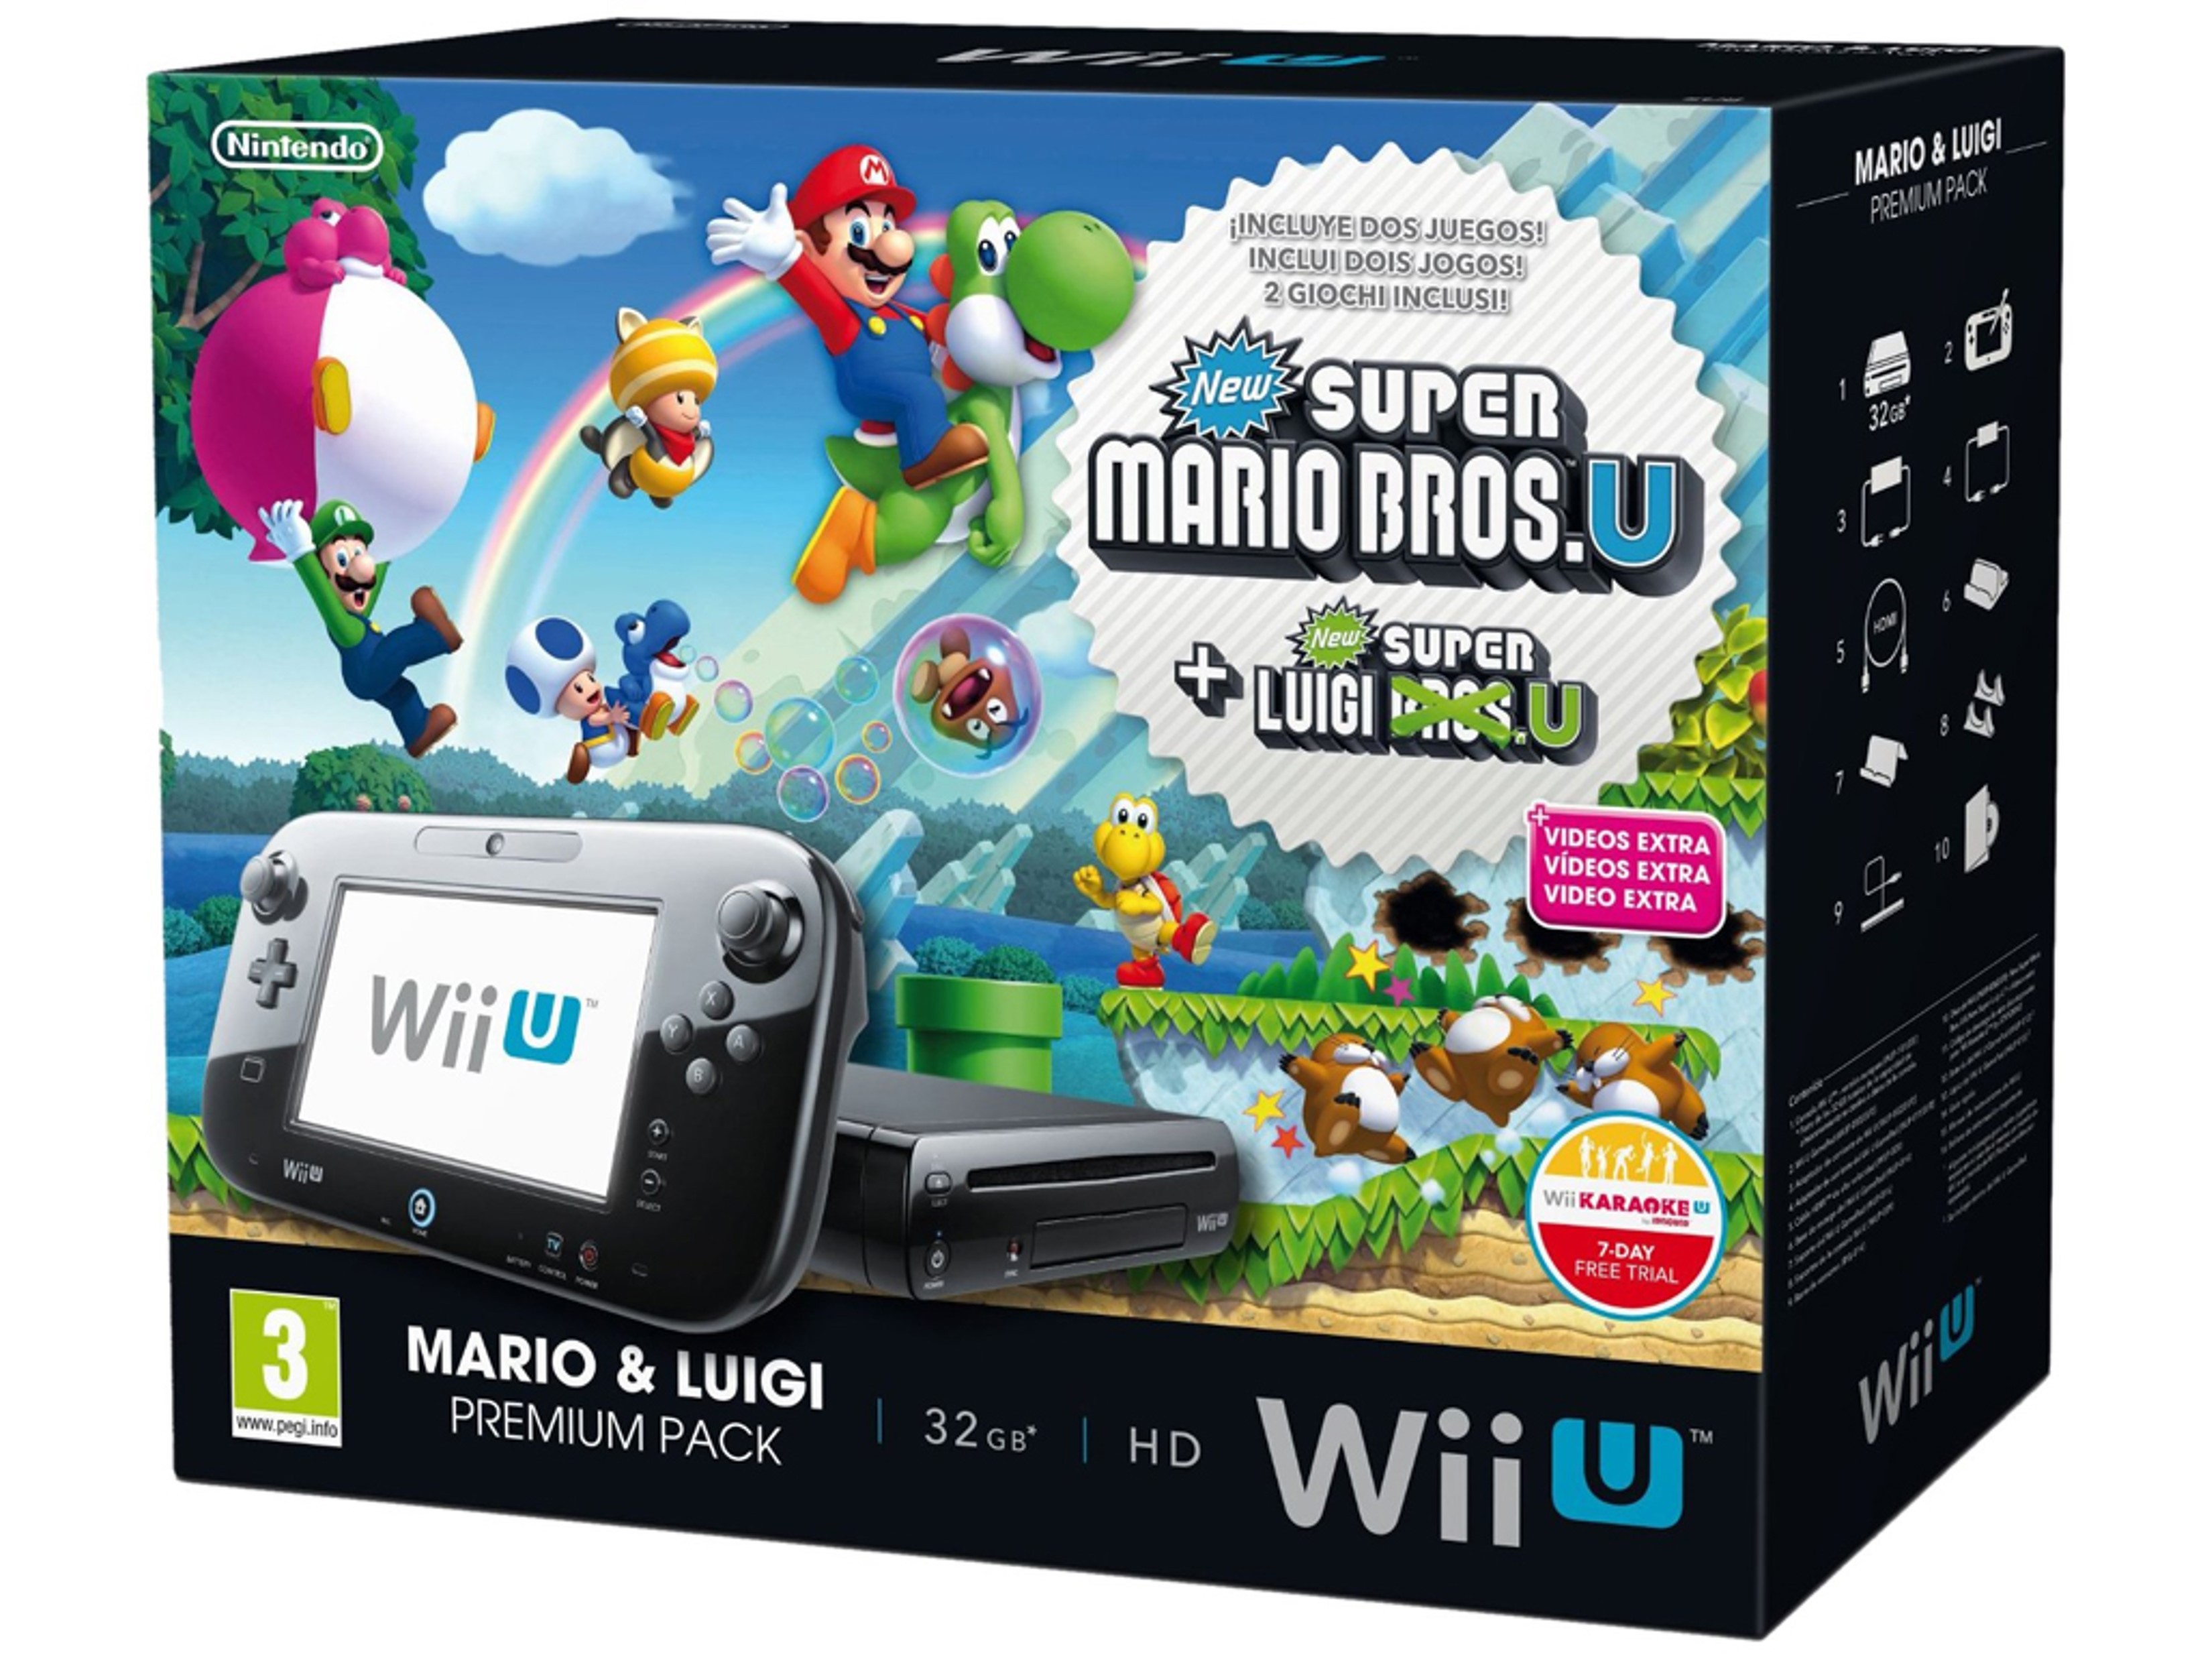 Nintendo Wii U Starter Pack - New Super Mario Bros. U + New Super Luigi U Edition [Complete] - Wii U Hardware